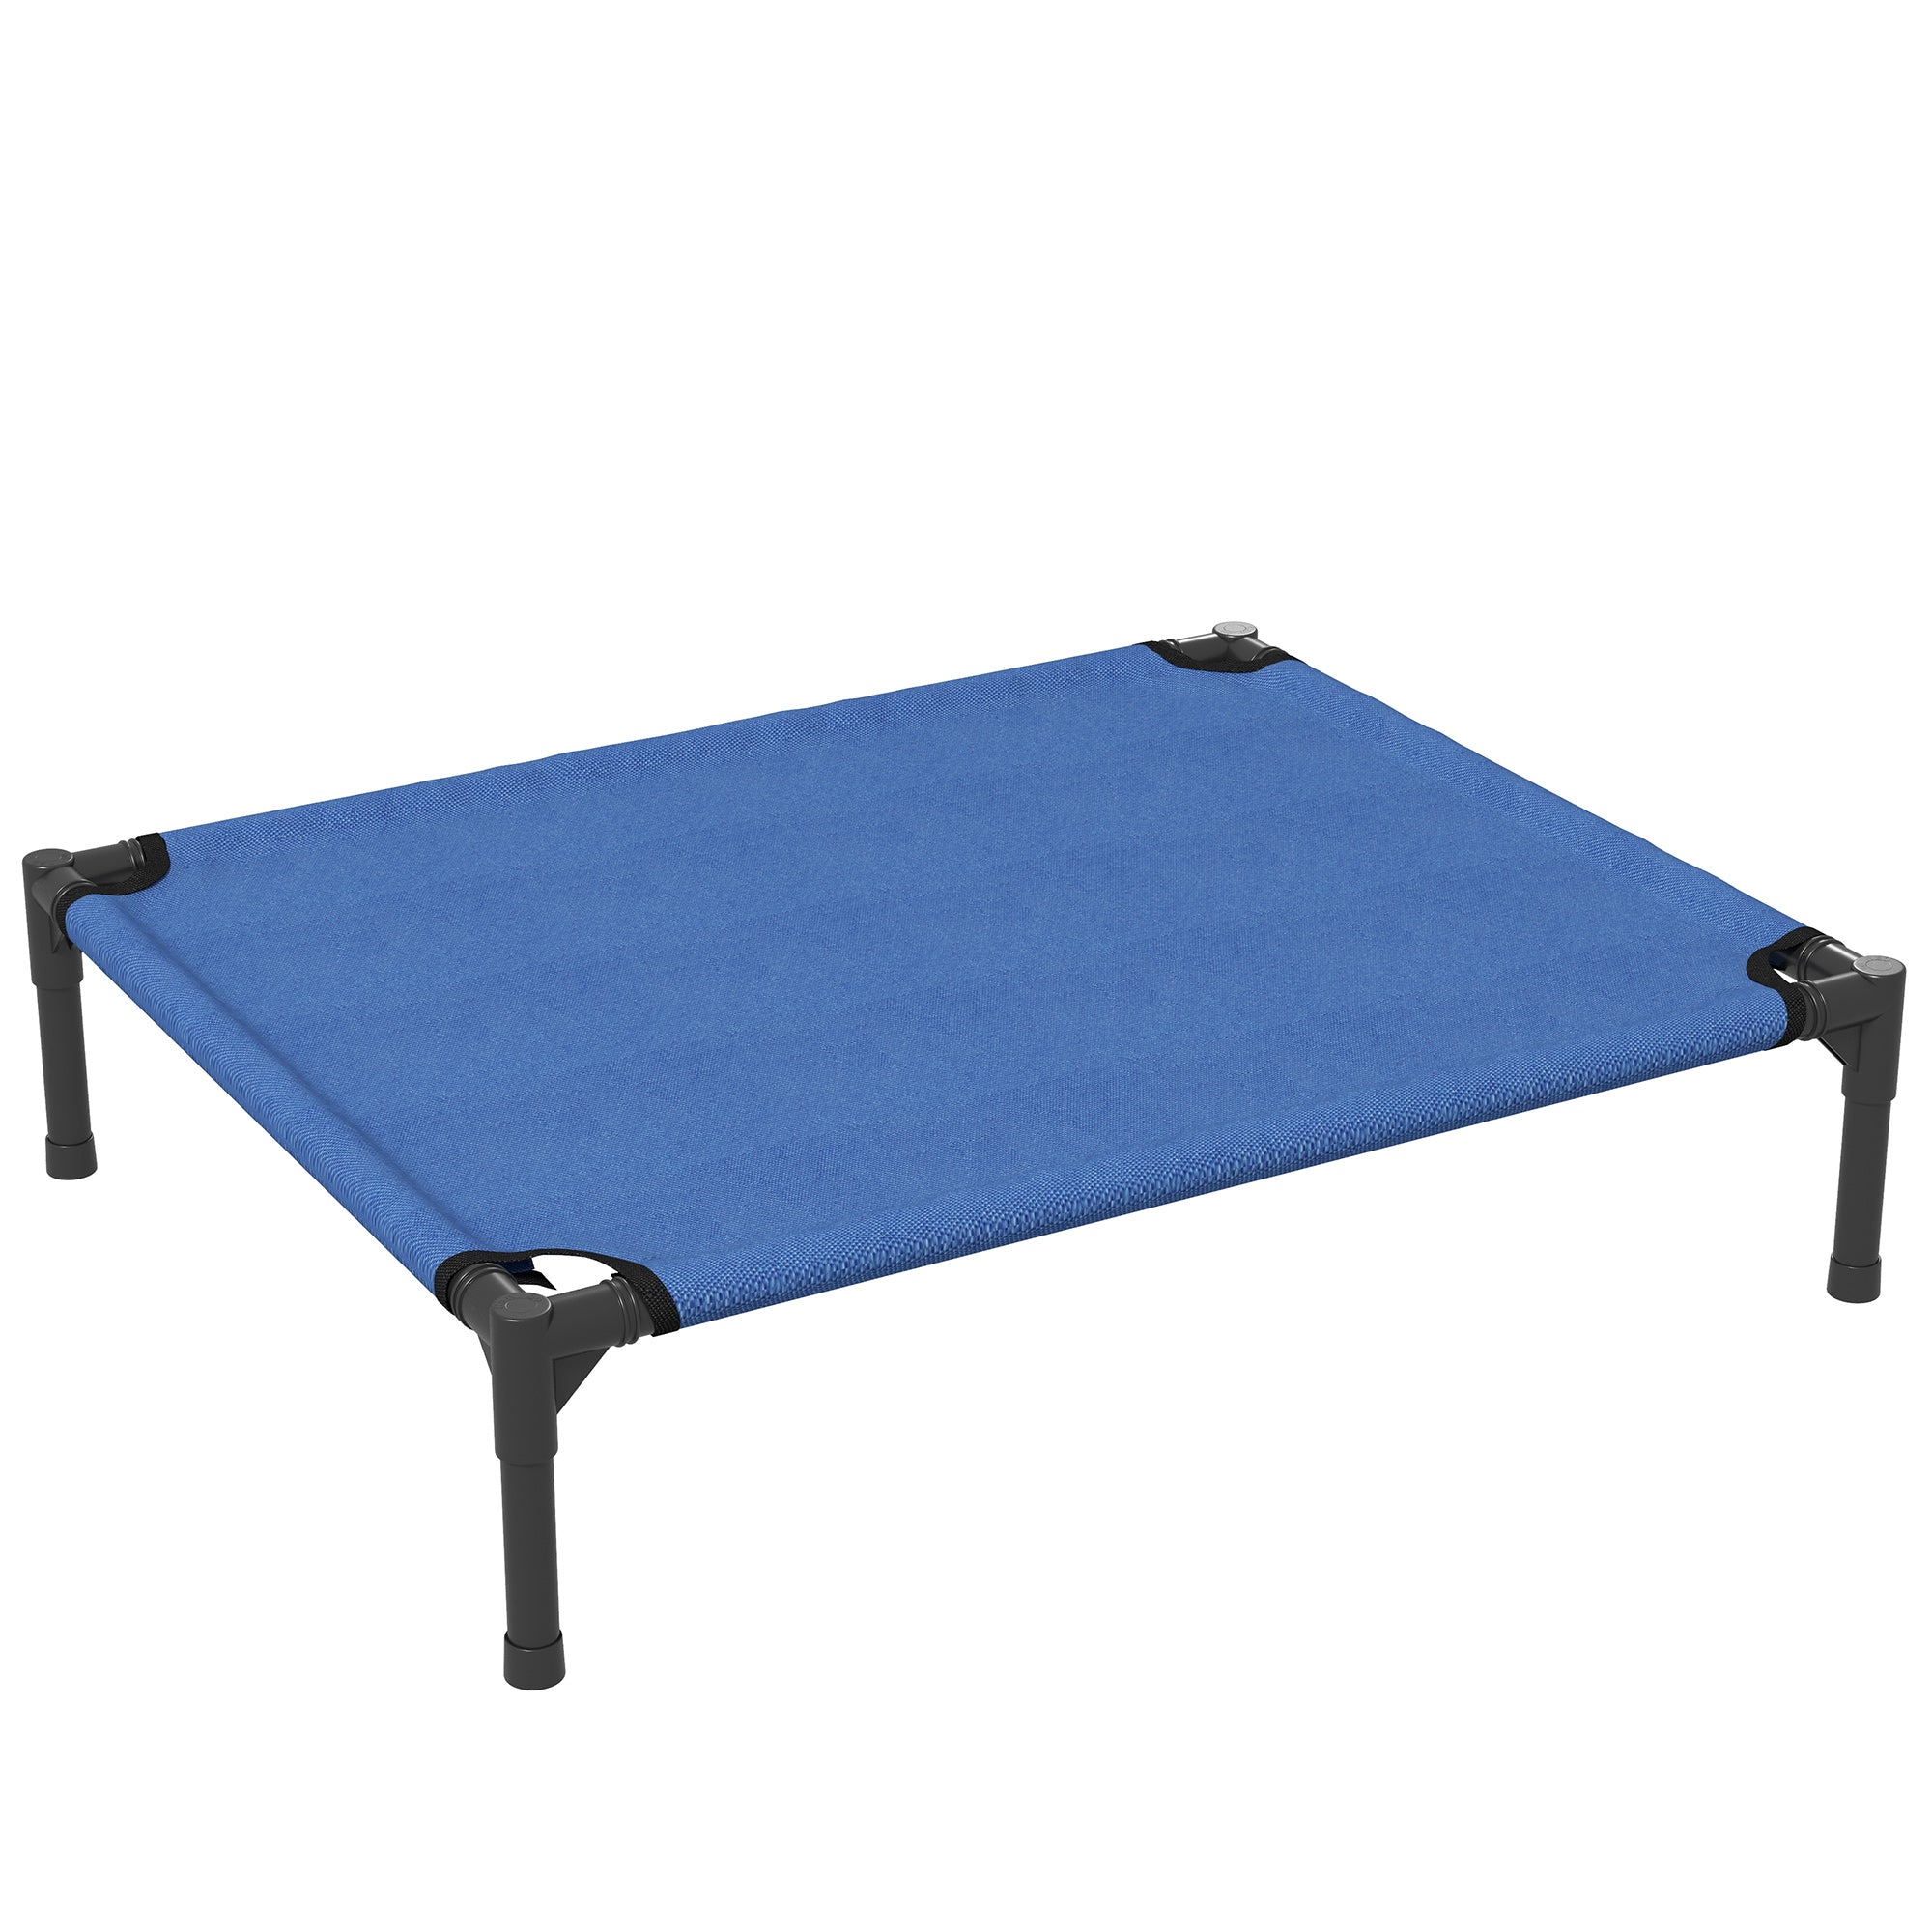 PawHut Elevated Pet Bed Portable Camping Raised Dog Bed w/ Metal Frame Blue (Medium)  | TJ Hughes